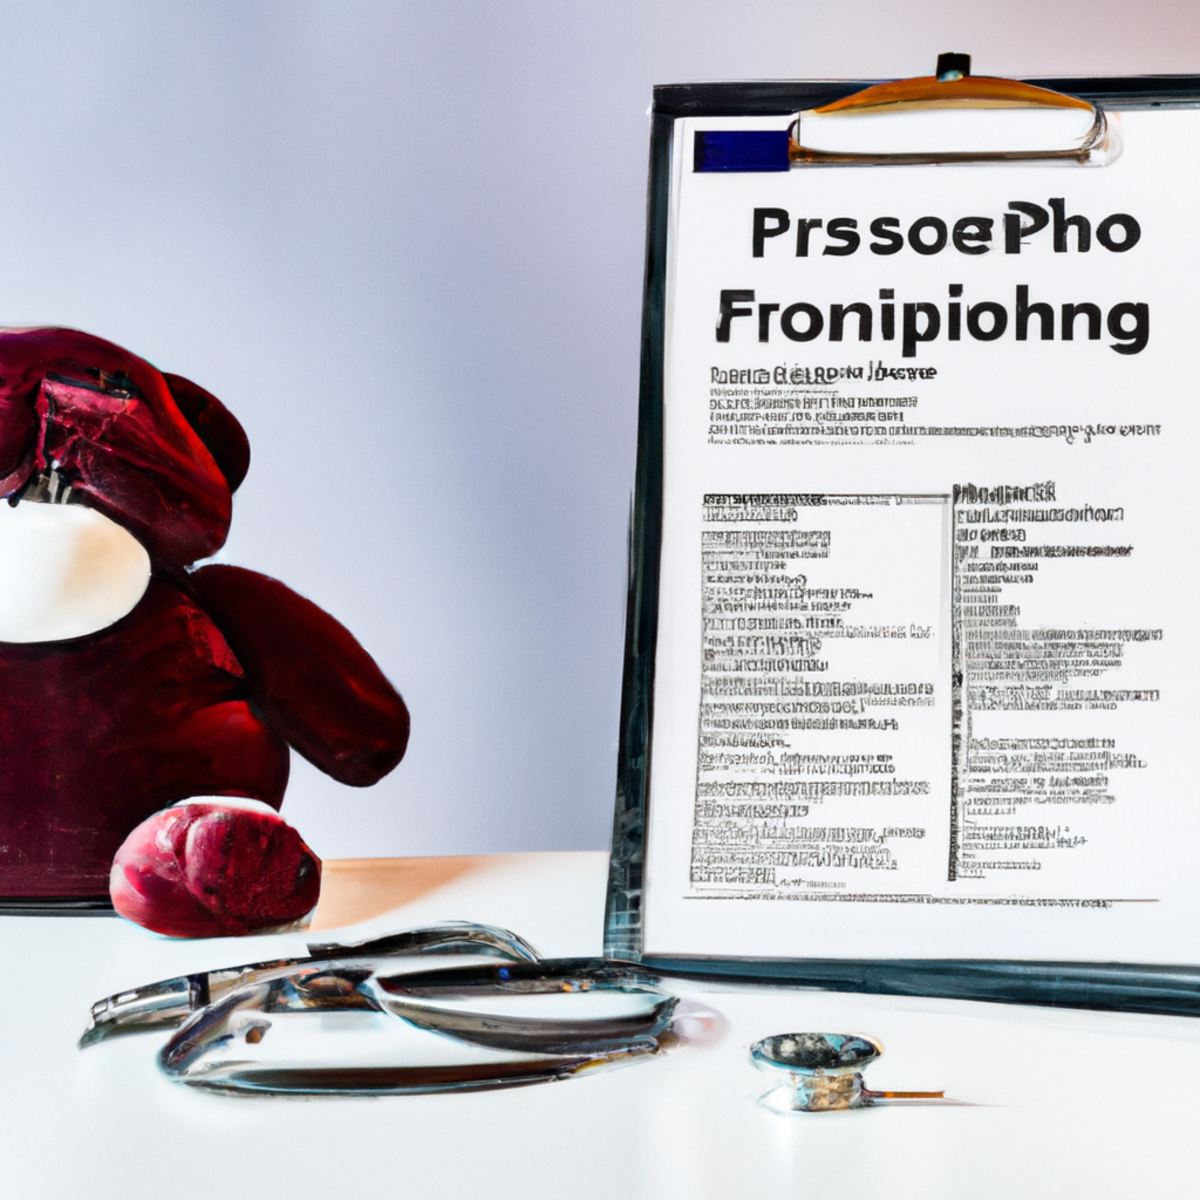 Pediatric medical examination room with stethoscope, charts, blood pressure cuff, and doctor's coat -Fibrodysplasia Ossificans Progressiva (FOP)